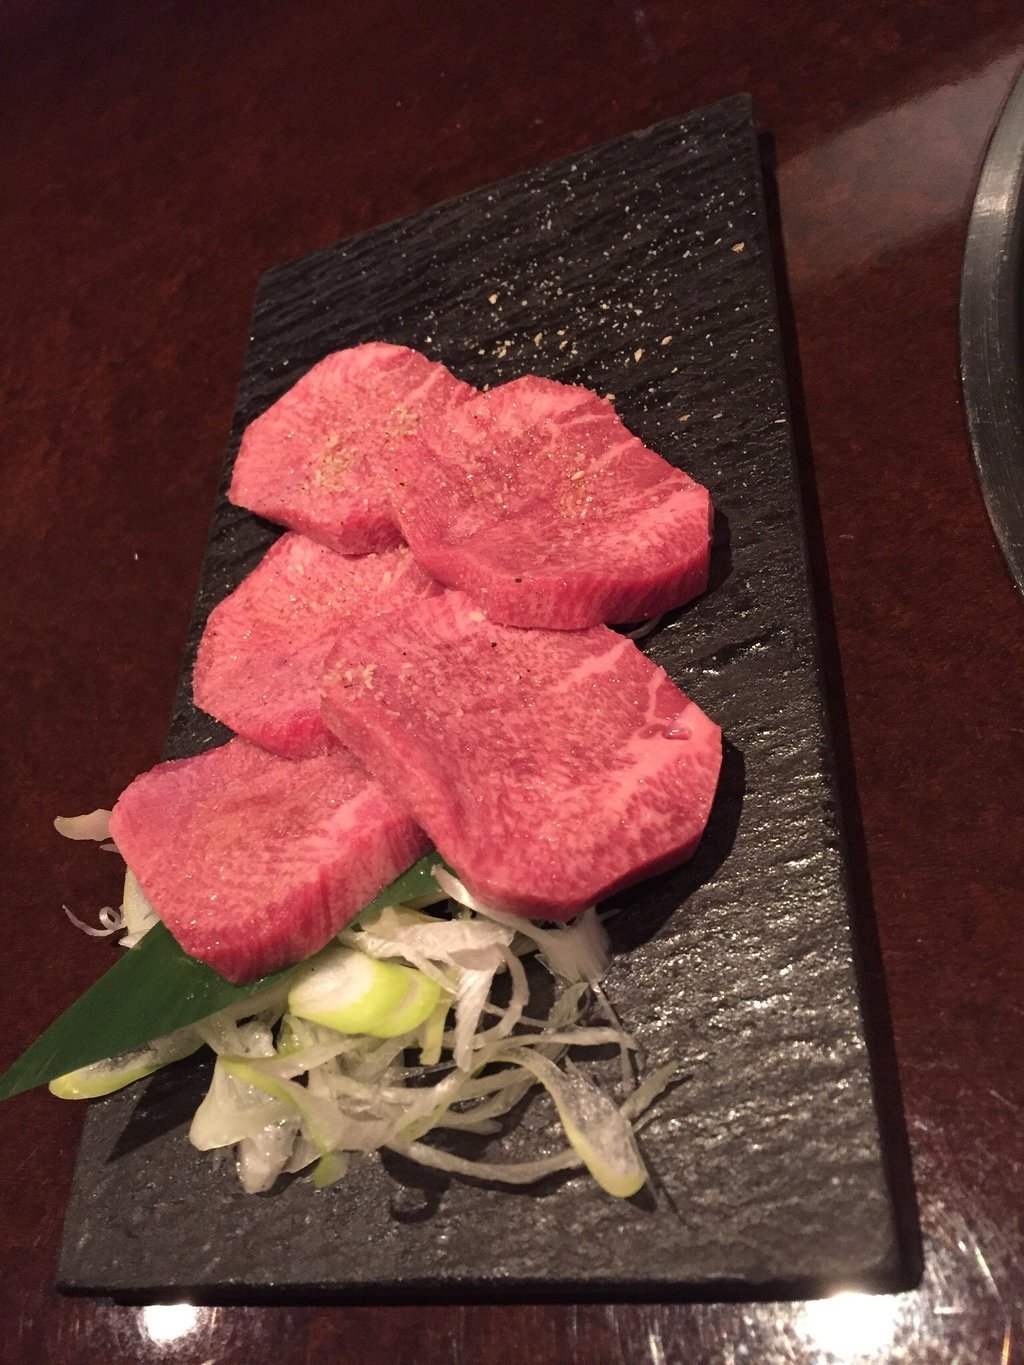 Grilled Beef Inoue Shibuya